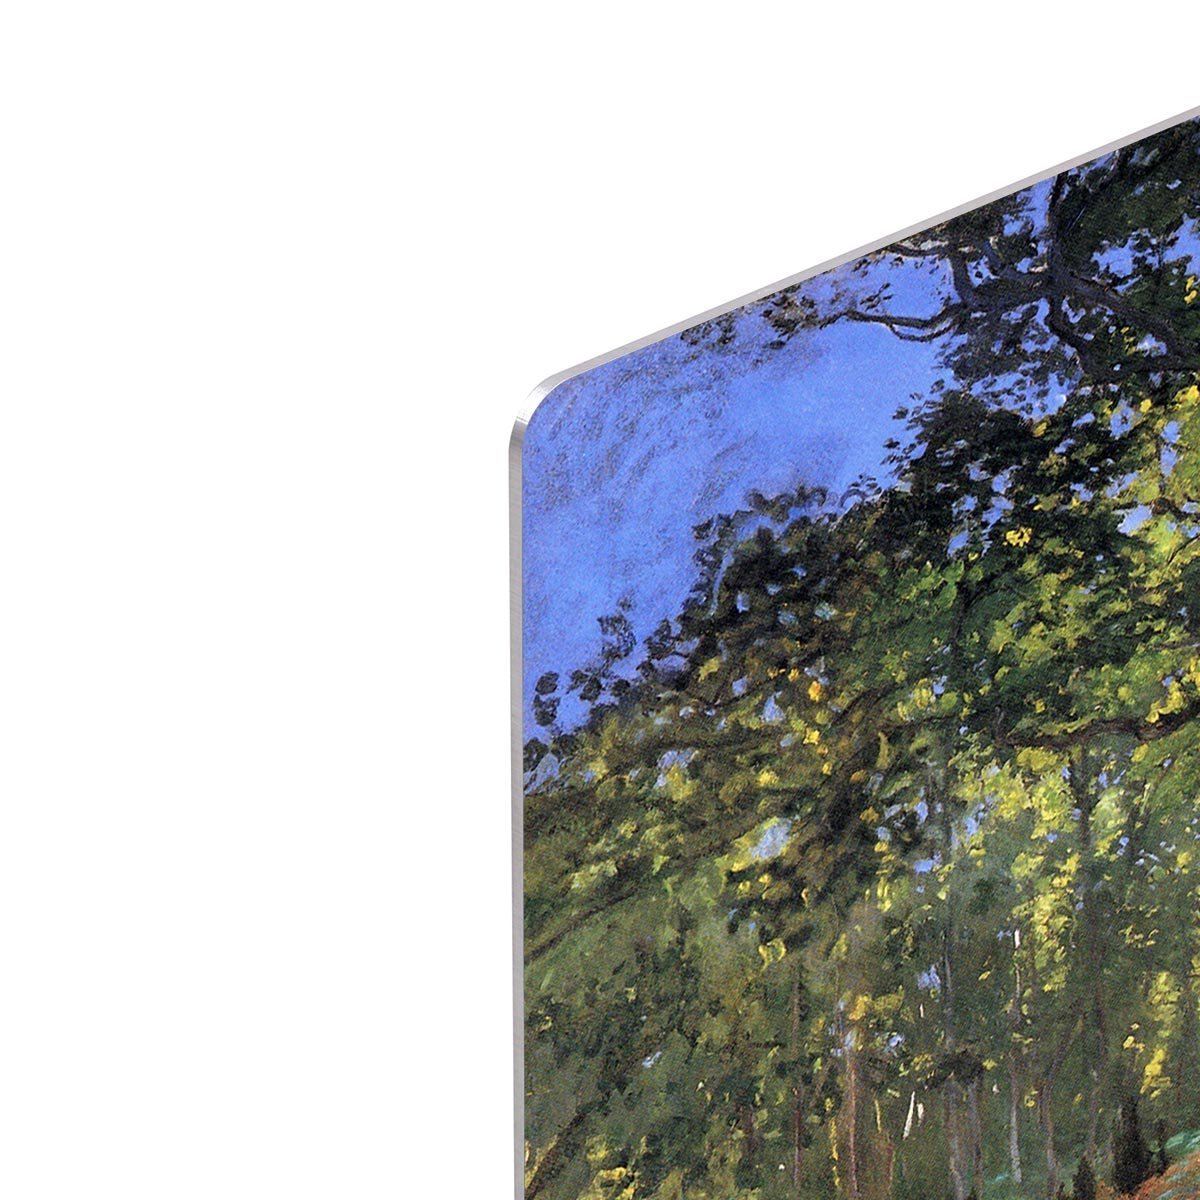 The Bodmer oak Fontainbleau forest by Monet HD Metal Print